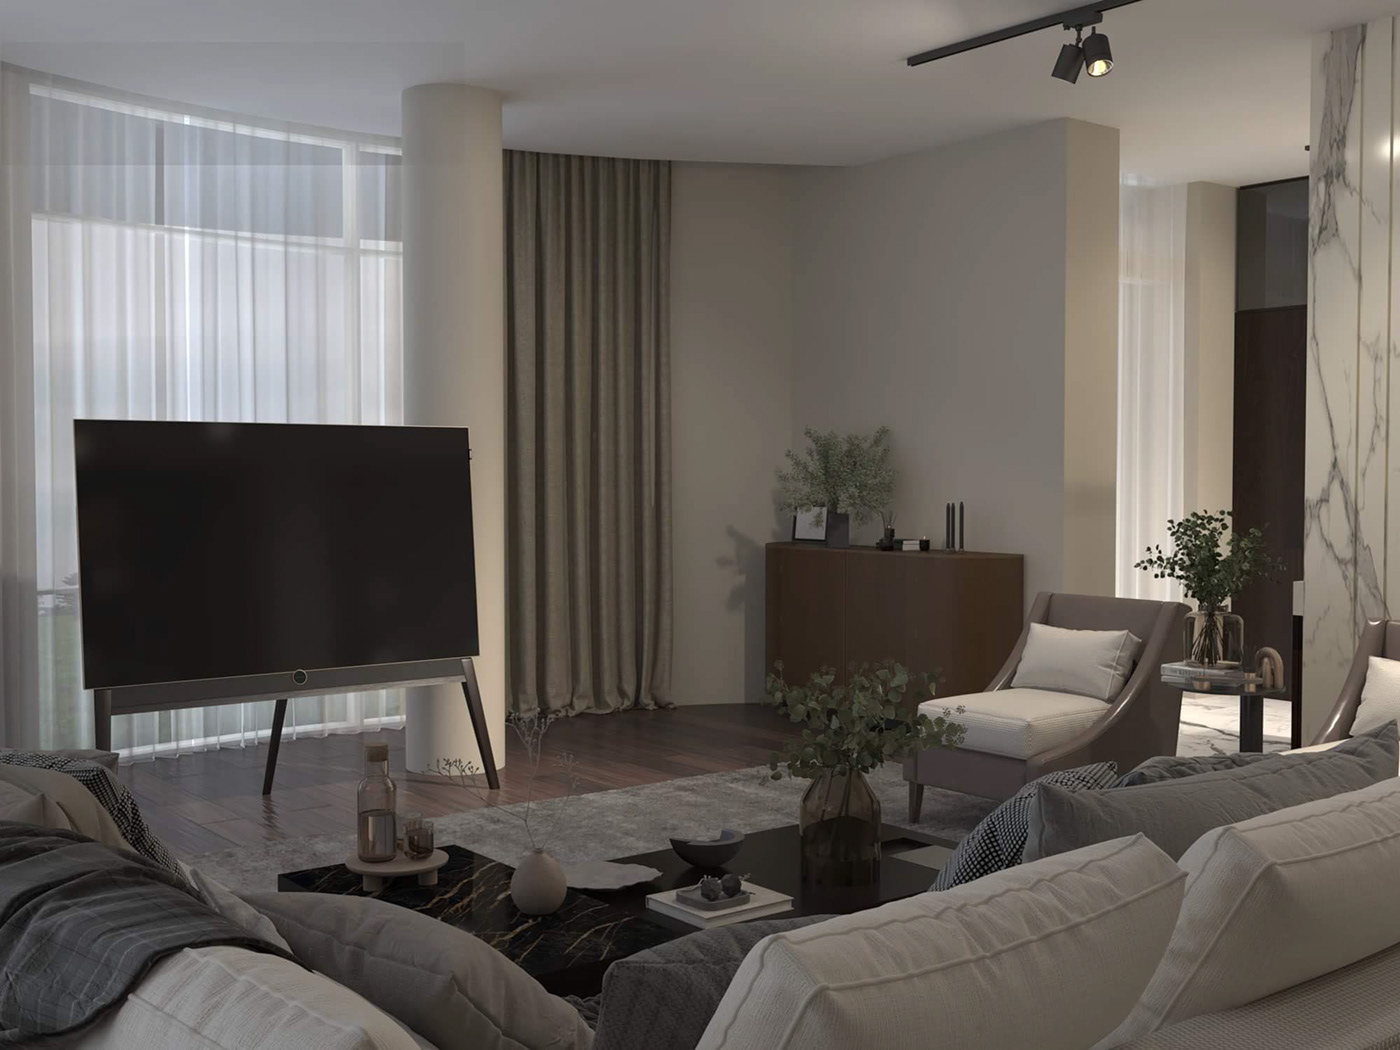 design 3ds max Render modern vray corona artdeco room bedroom interior design 